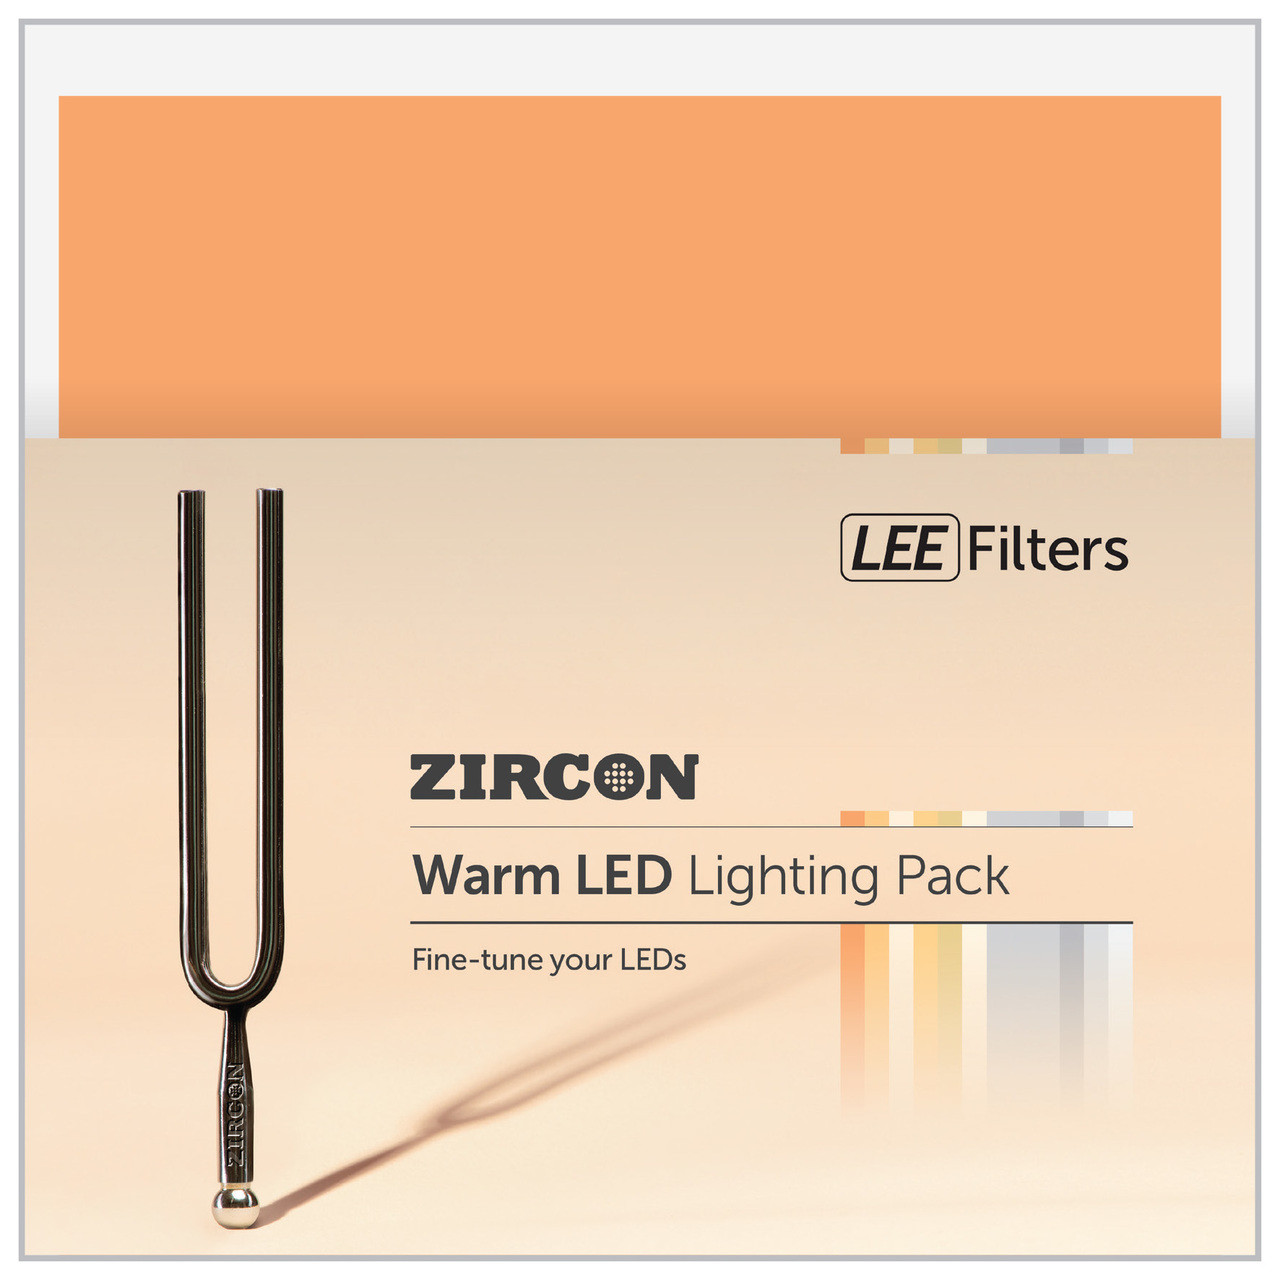 LEE Filters Zircon Warm LED Lighting Pack